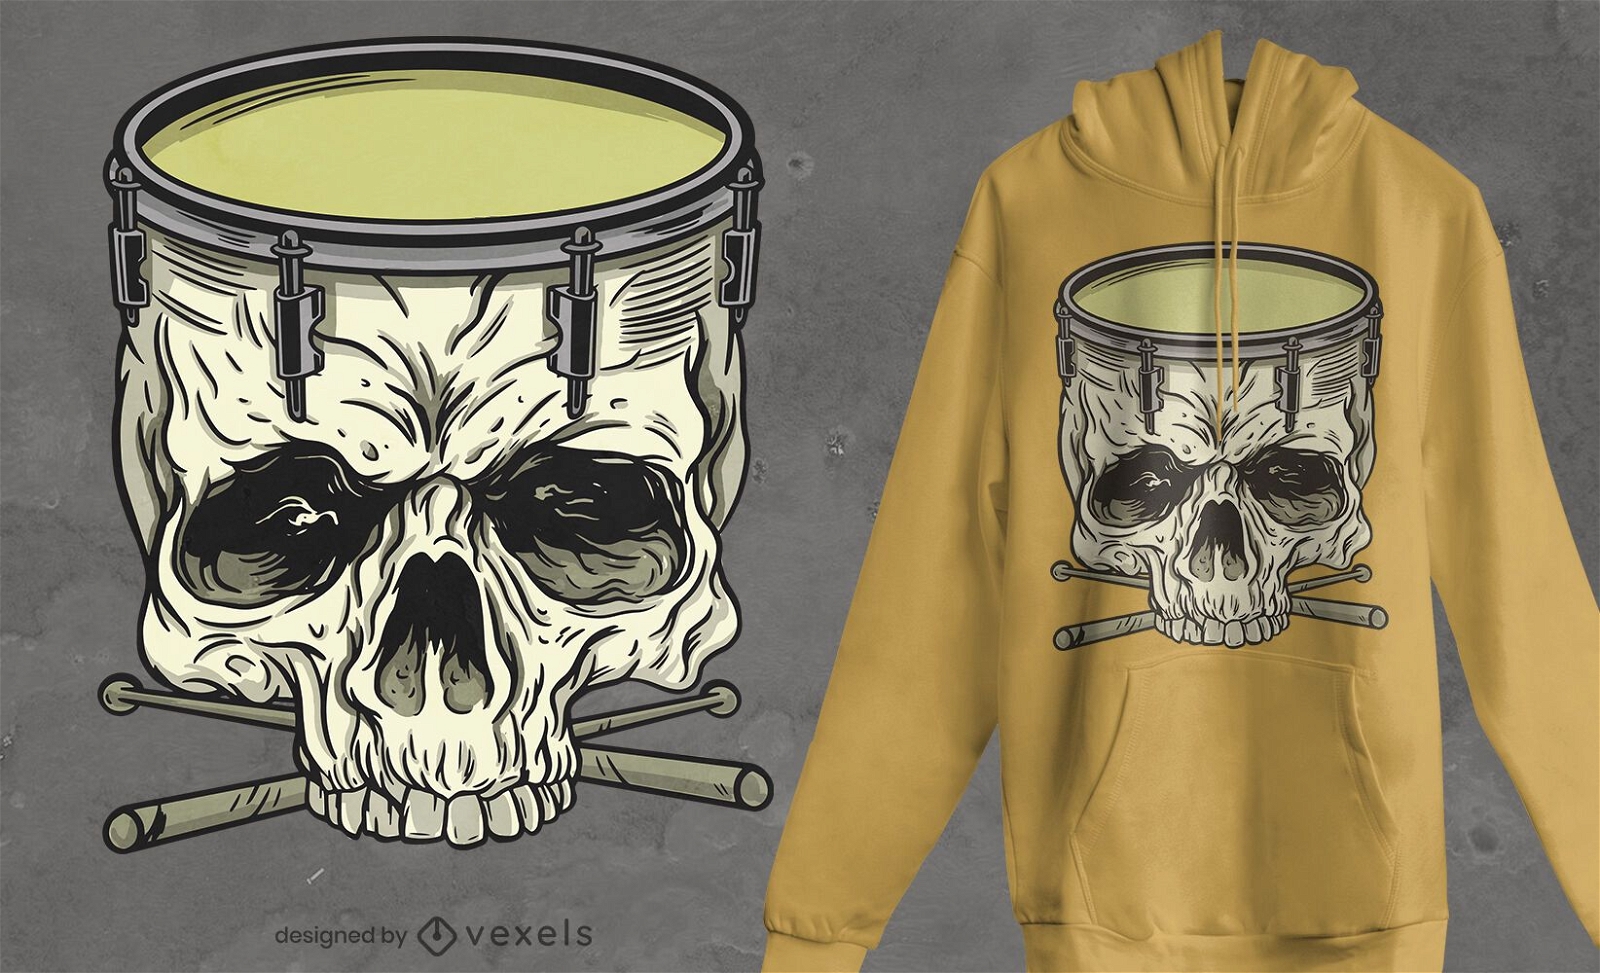 Skull drum t-shirt design